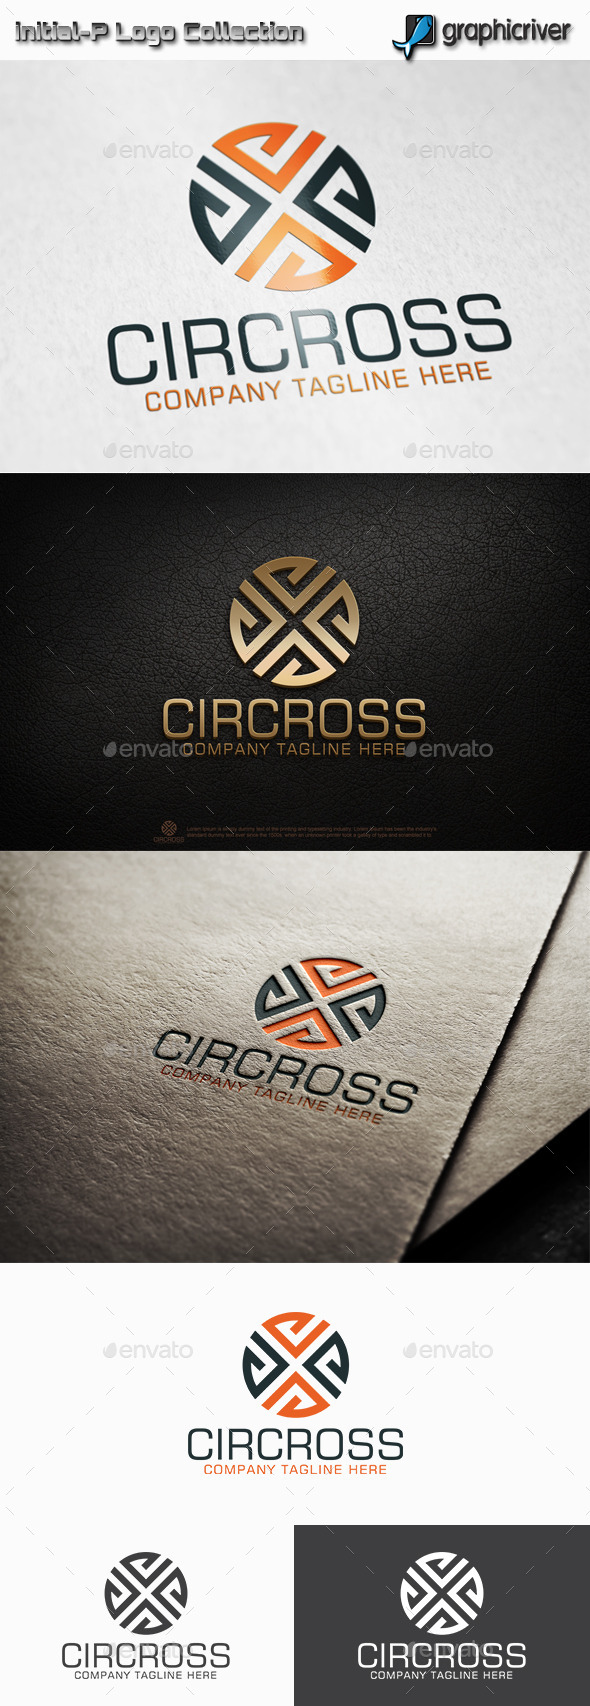 Circross - Circle cross Logo